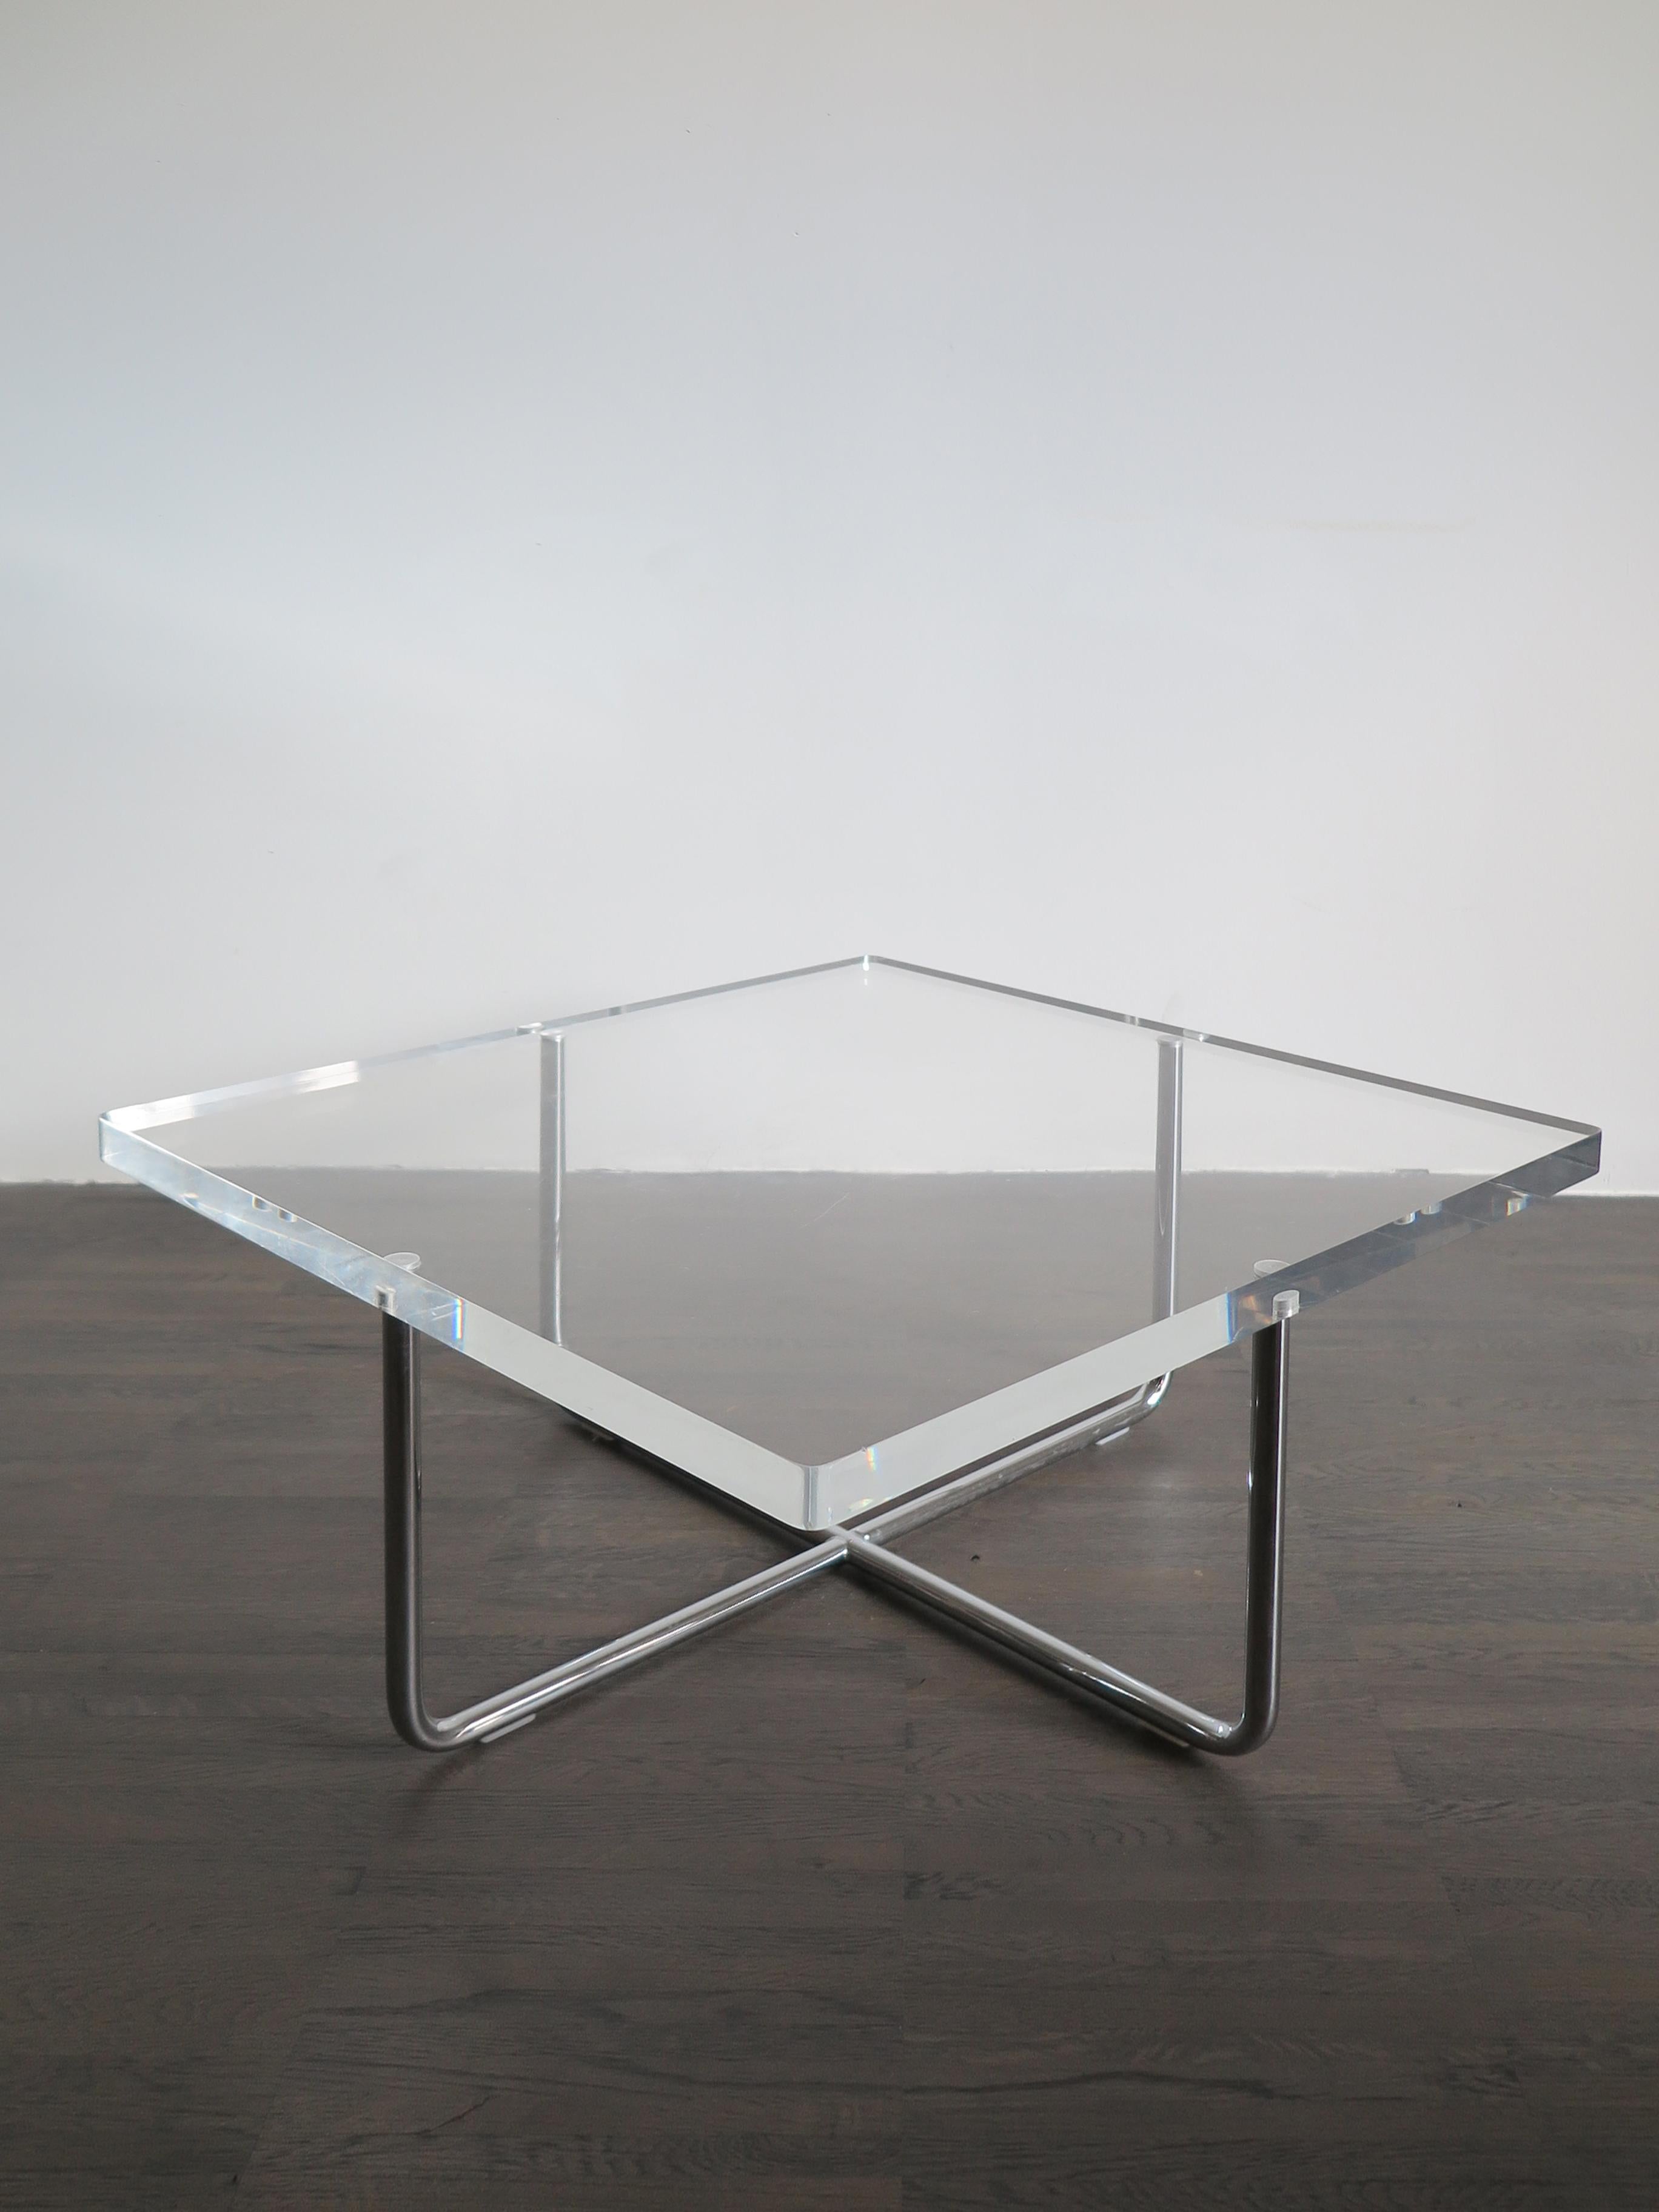 Late 20th Century Italian Couple of Plexiglass Modern Coffee Table Produced by Minotti, 1990s